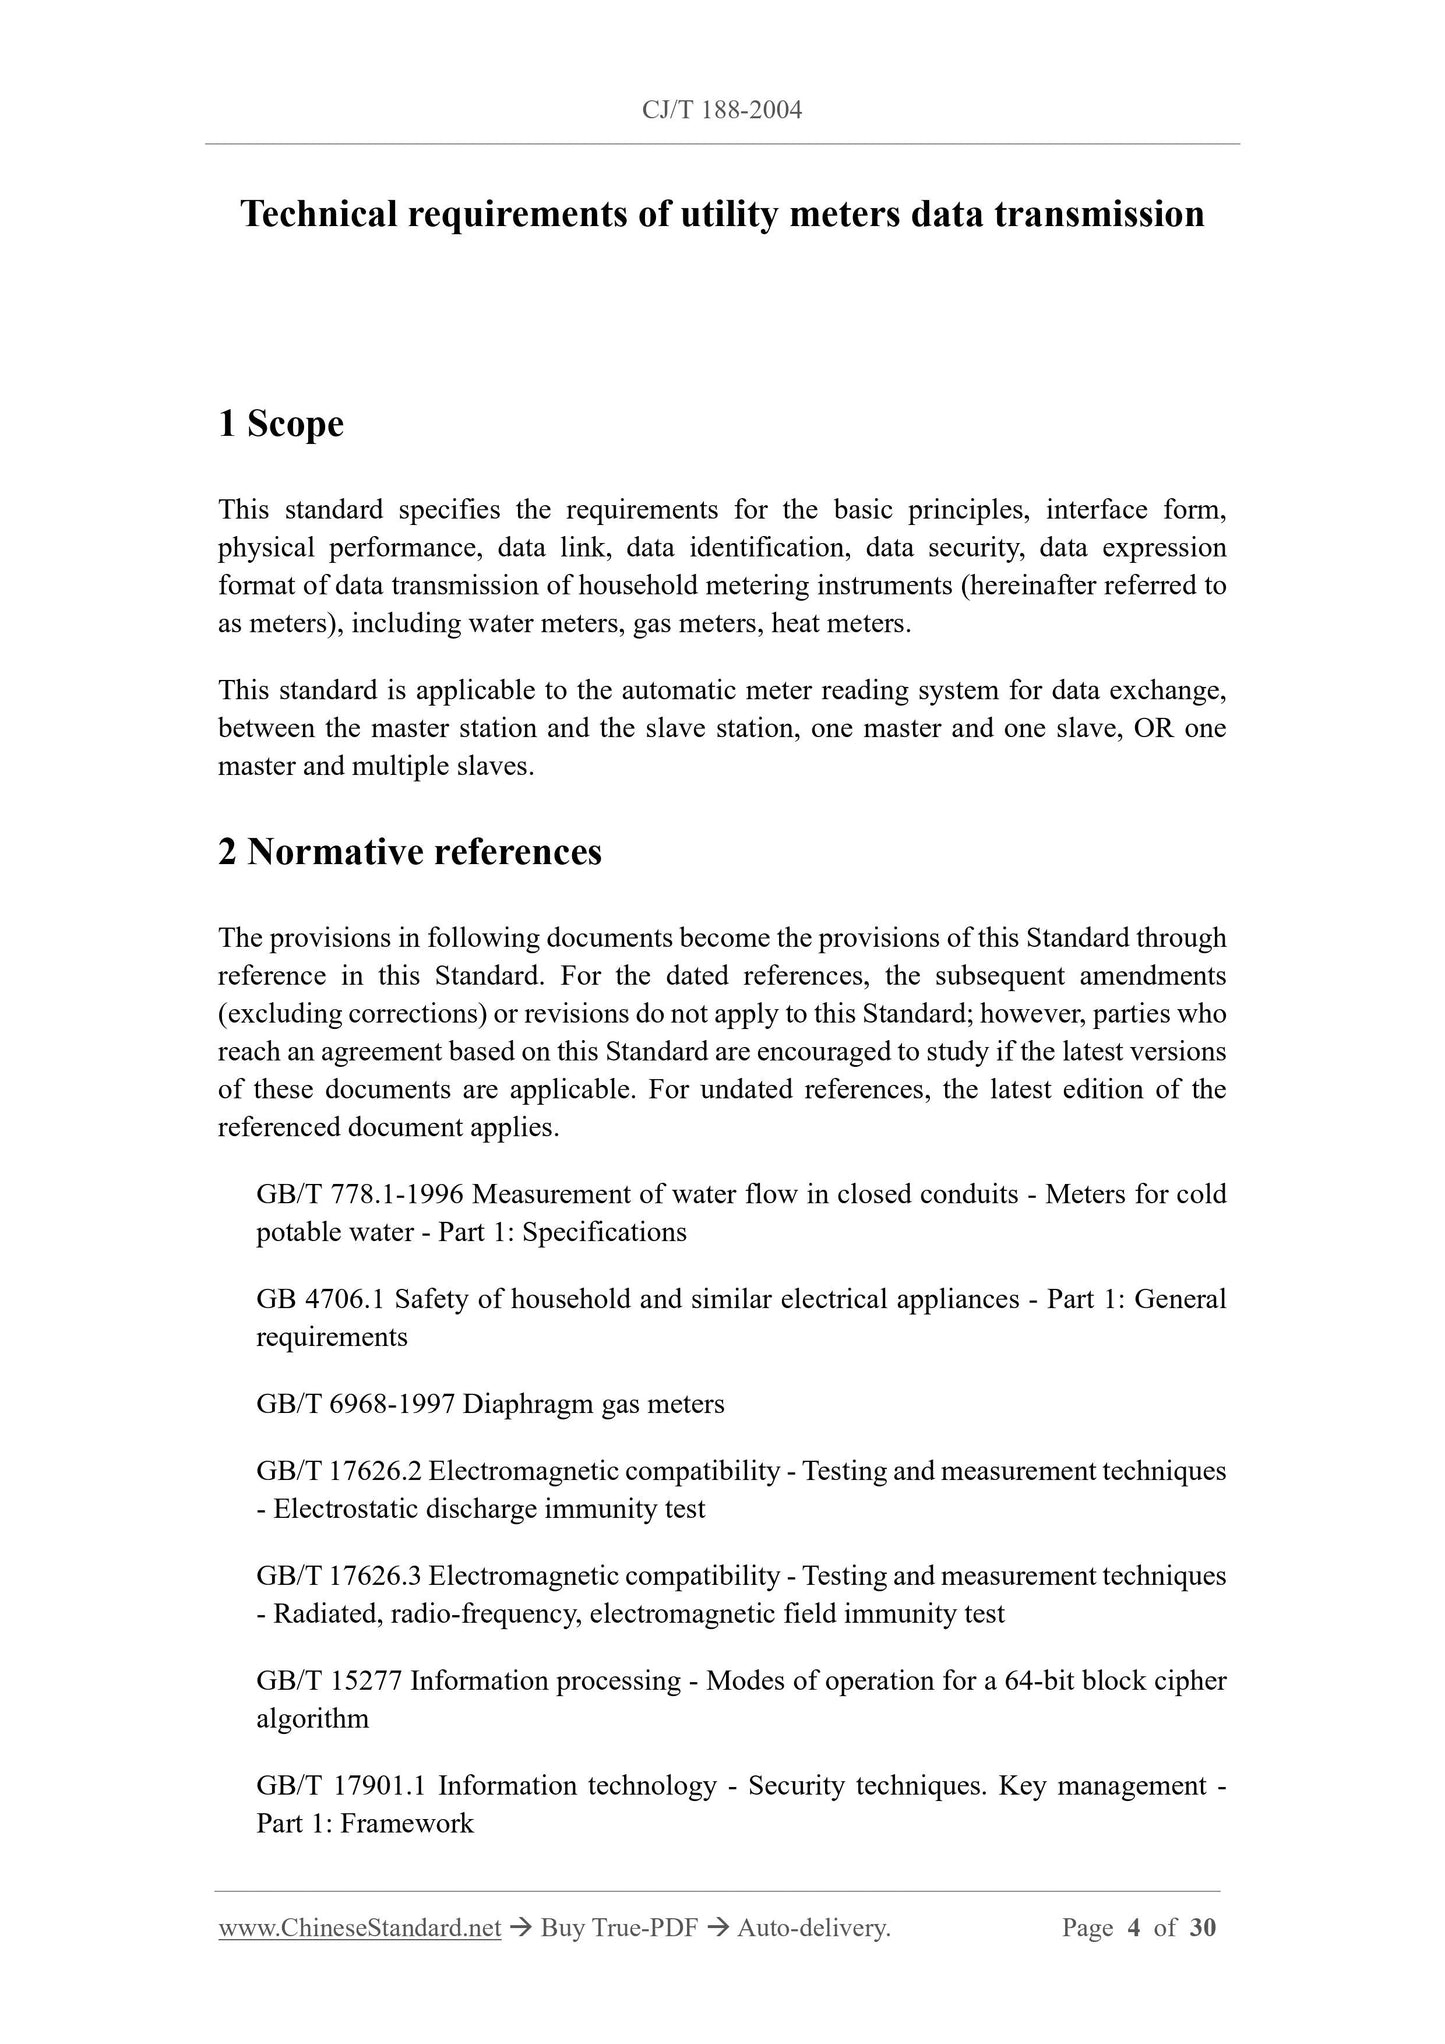 CJ/T 188-2004 Page 3